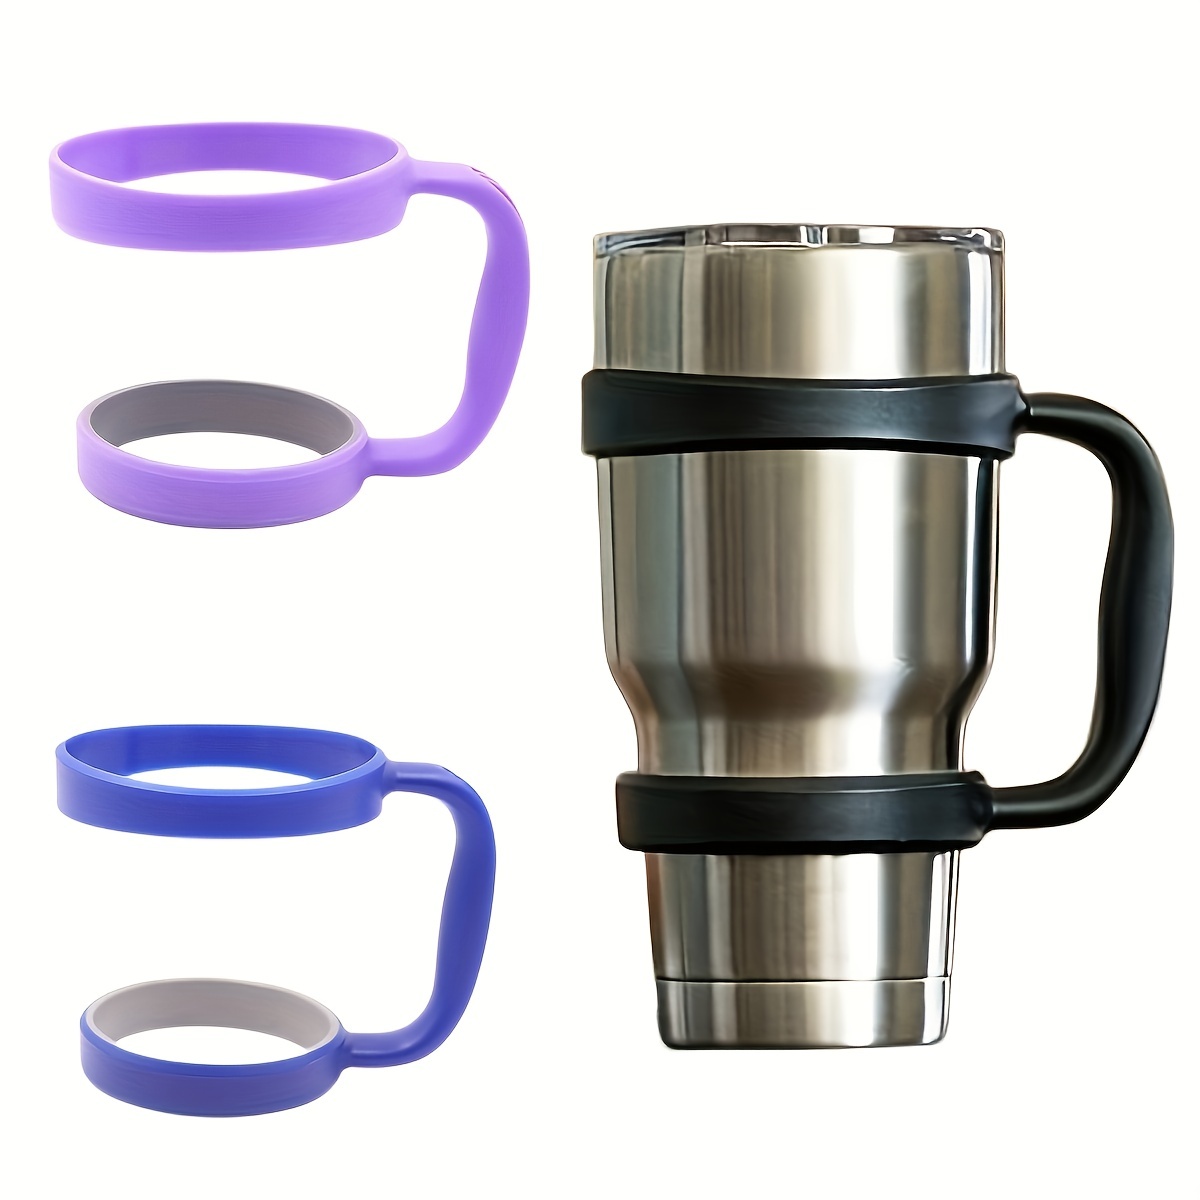 RTIC Plastic Handle for 30oz Cup Design RTIC 30 oz. Tumbler